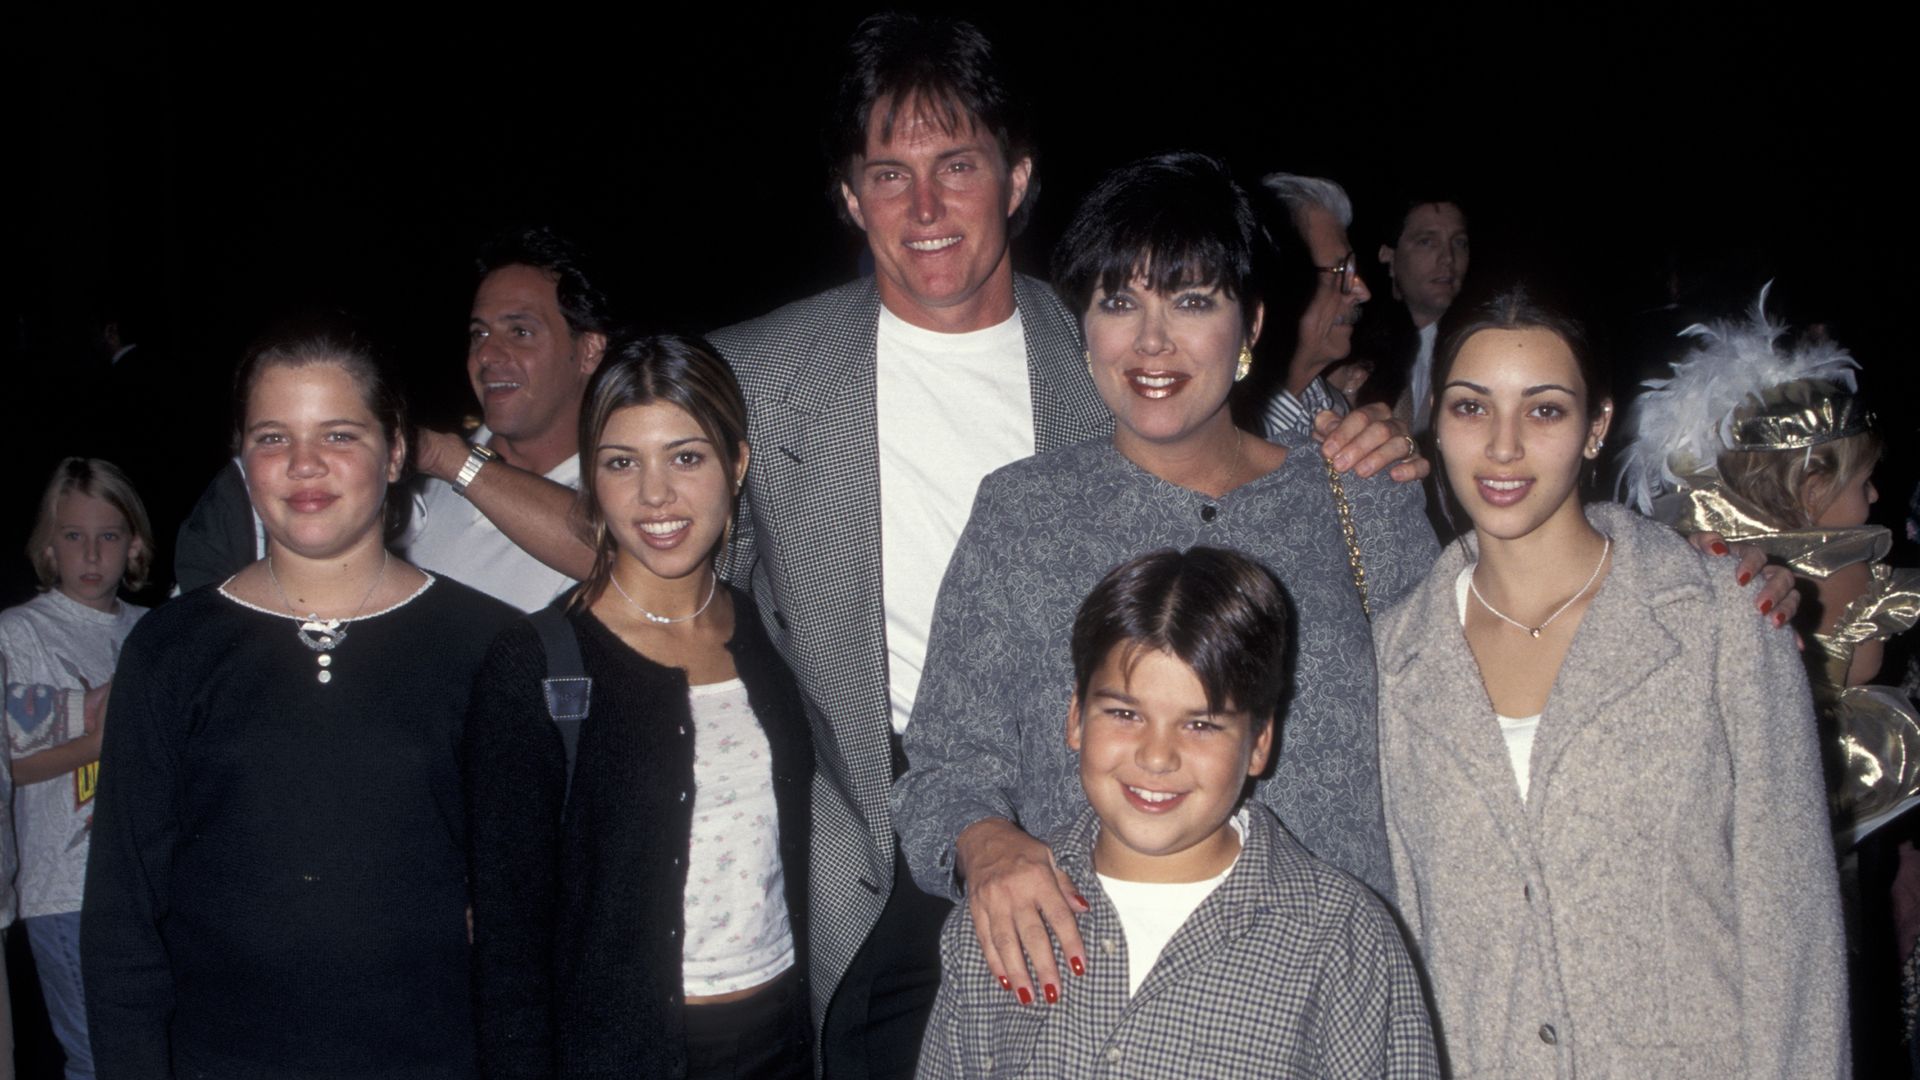 The Kardashian-Jenner family posing for a photo